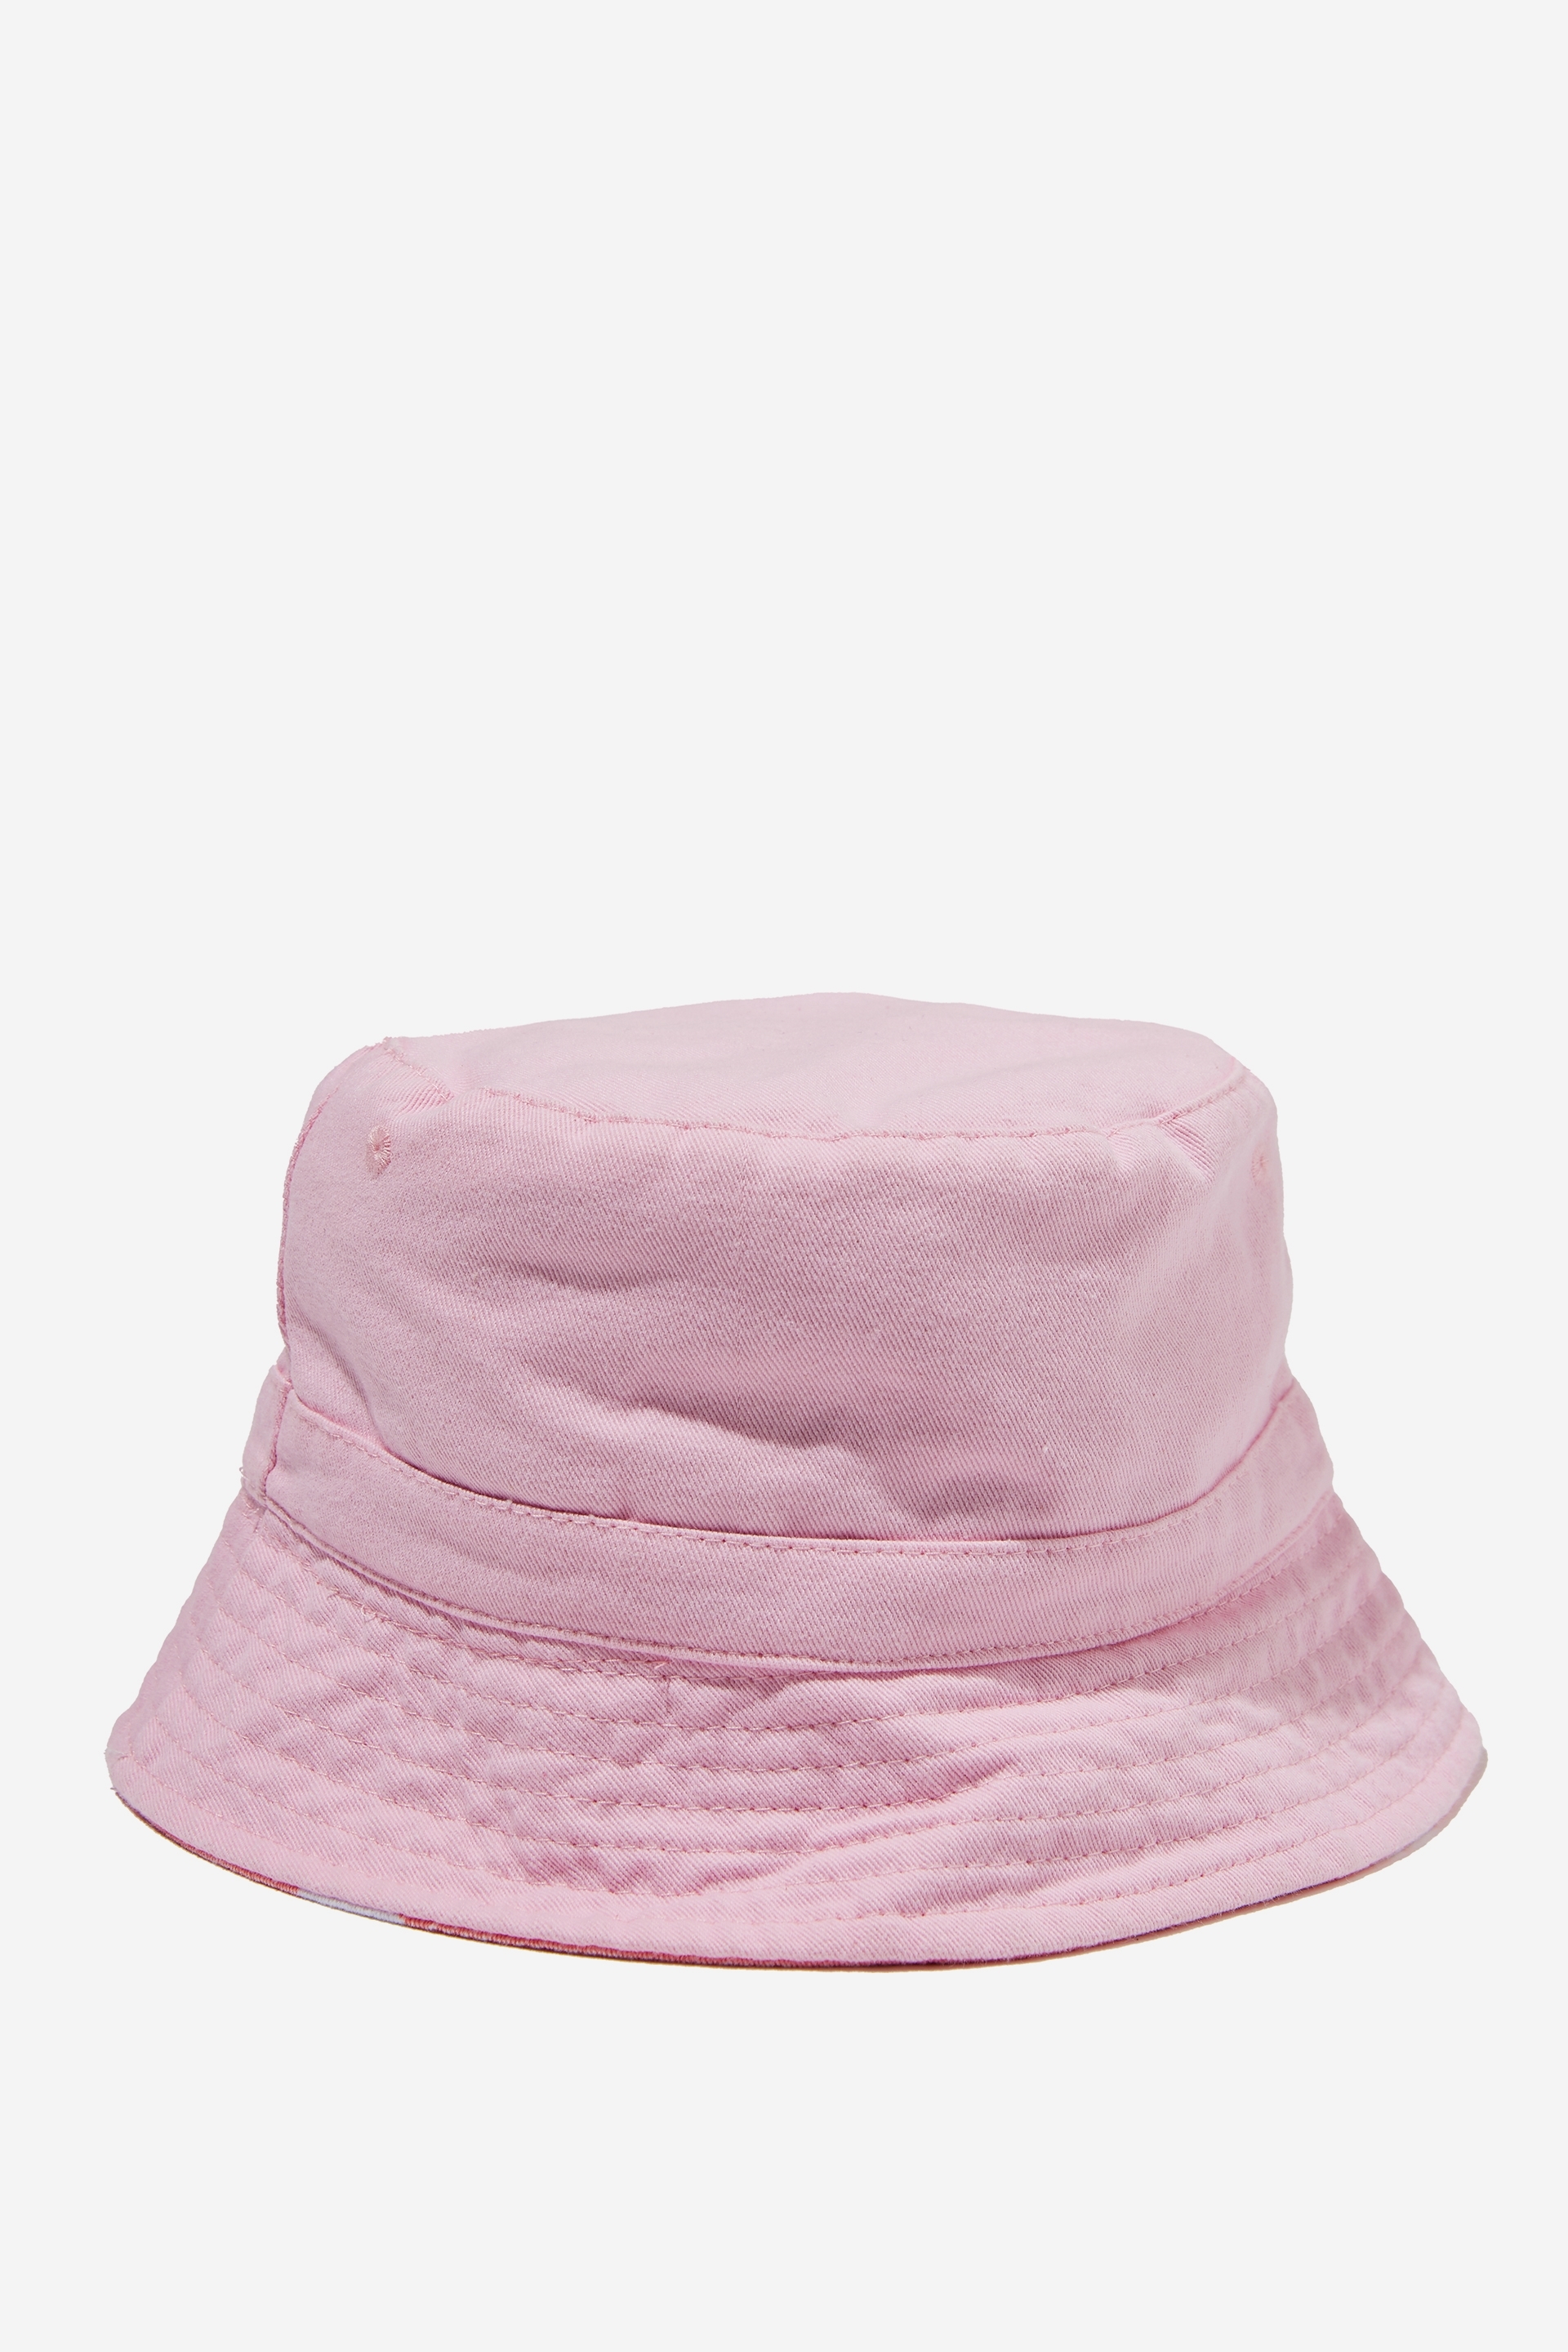 Cotton On Kids - Baby Bucket Hat - Crystal retro pink tie dye